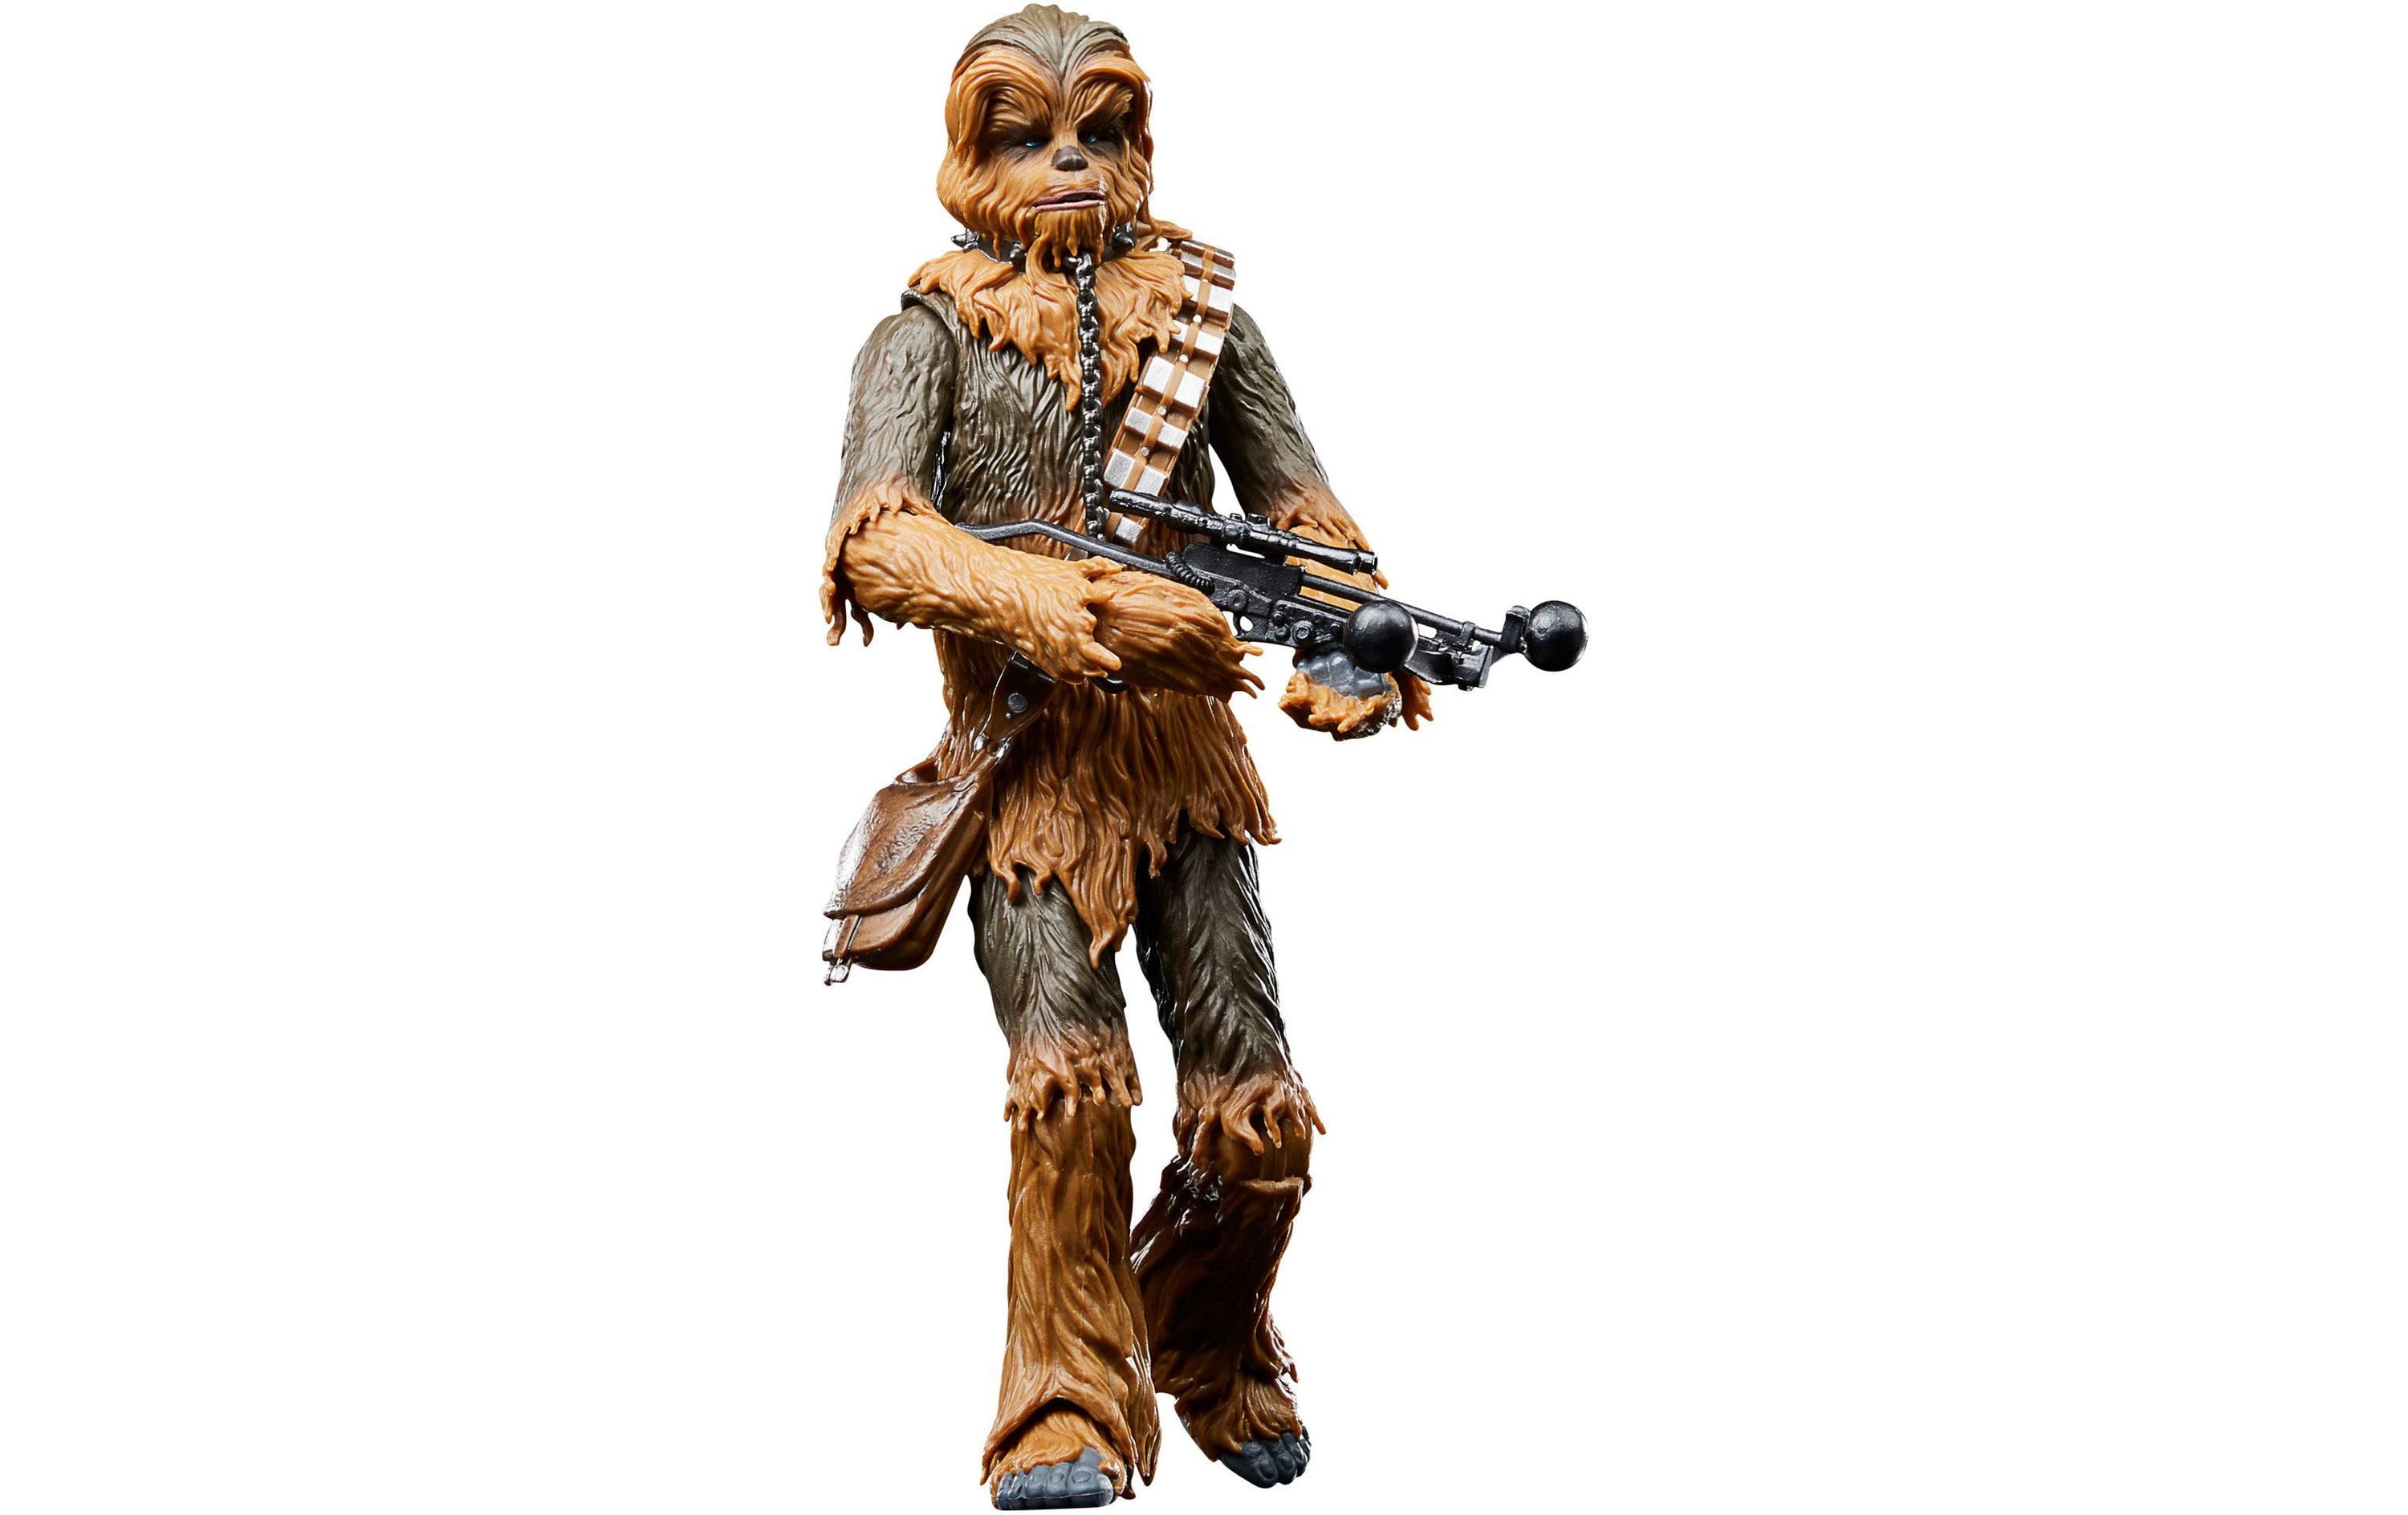 STAR WARS Star Wars Return of the Jedi: Chewbacca